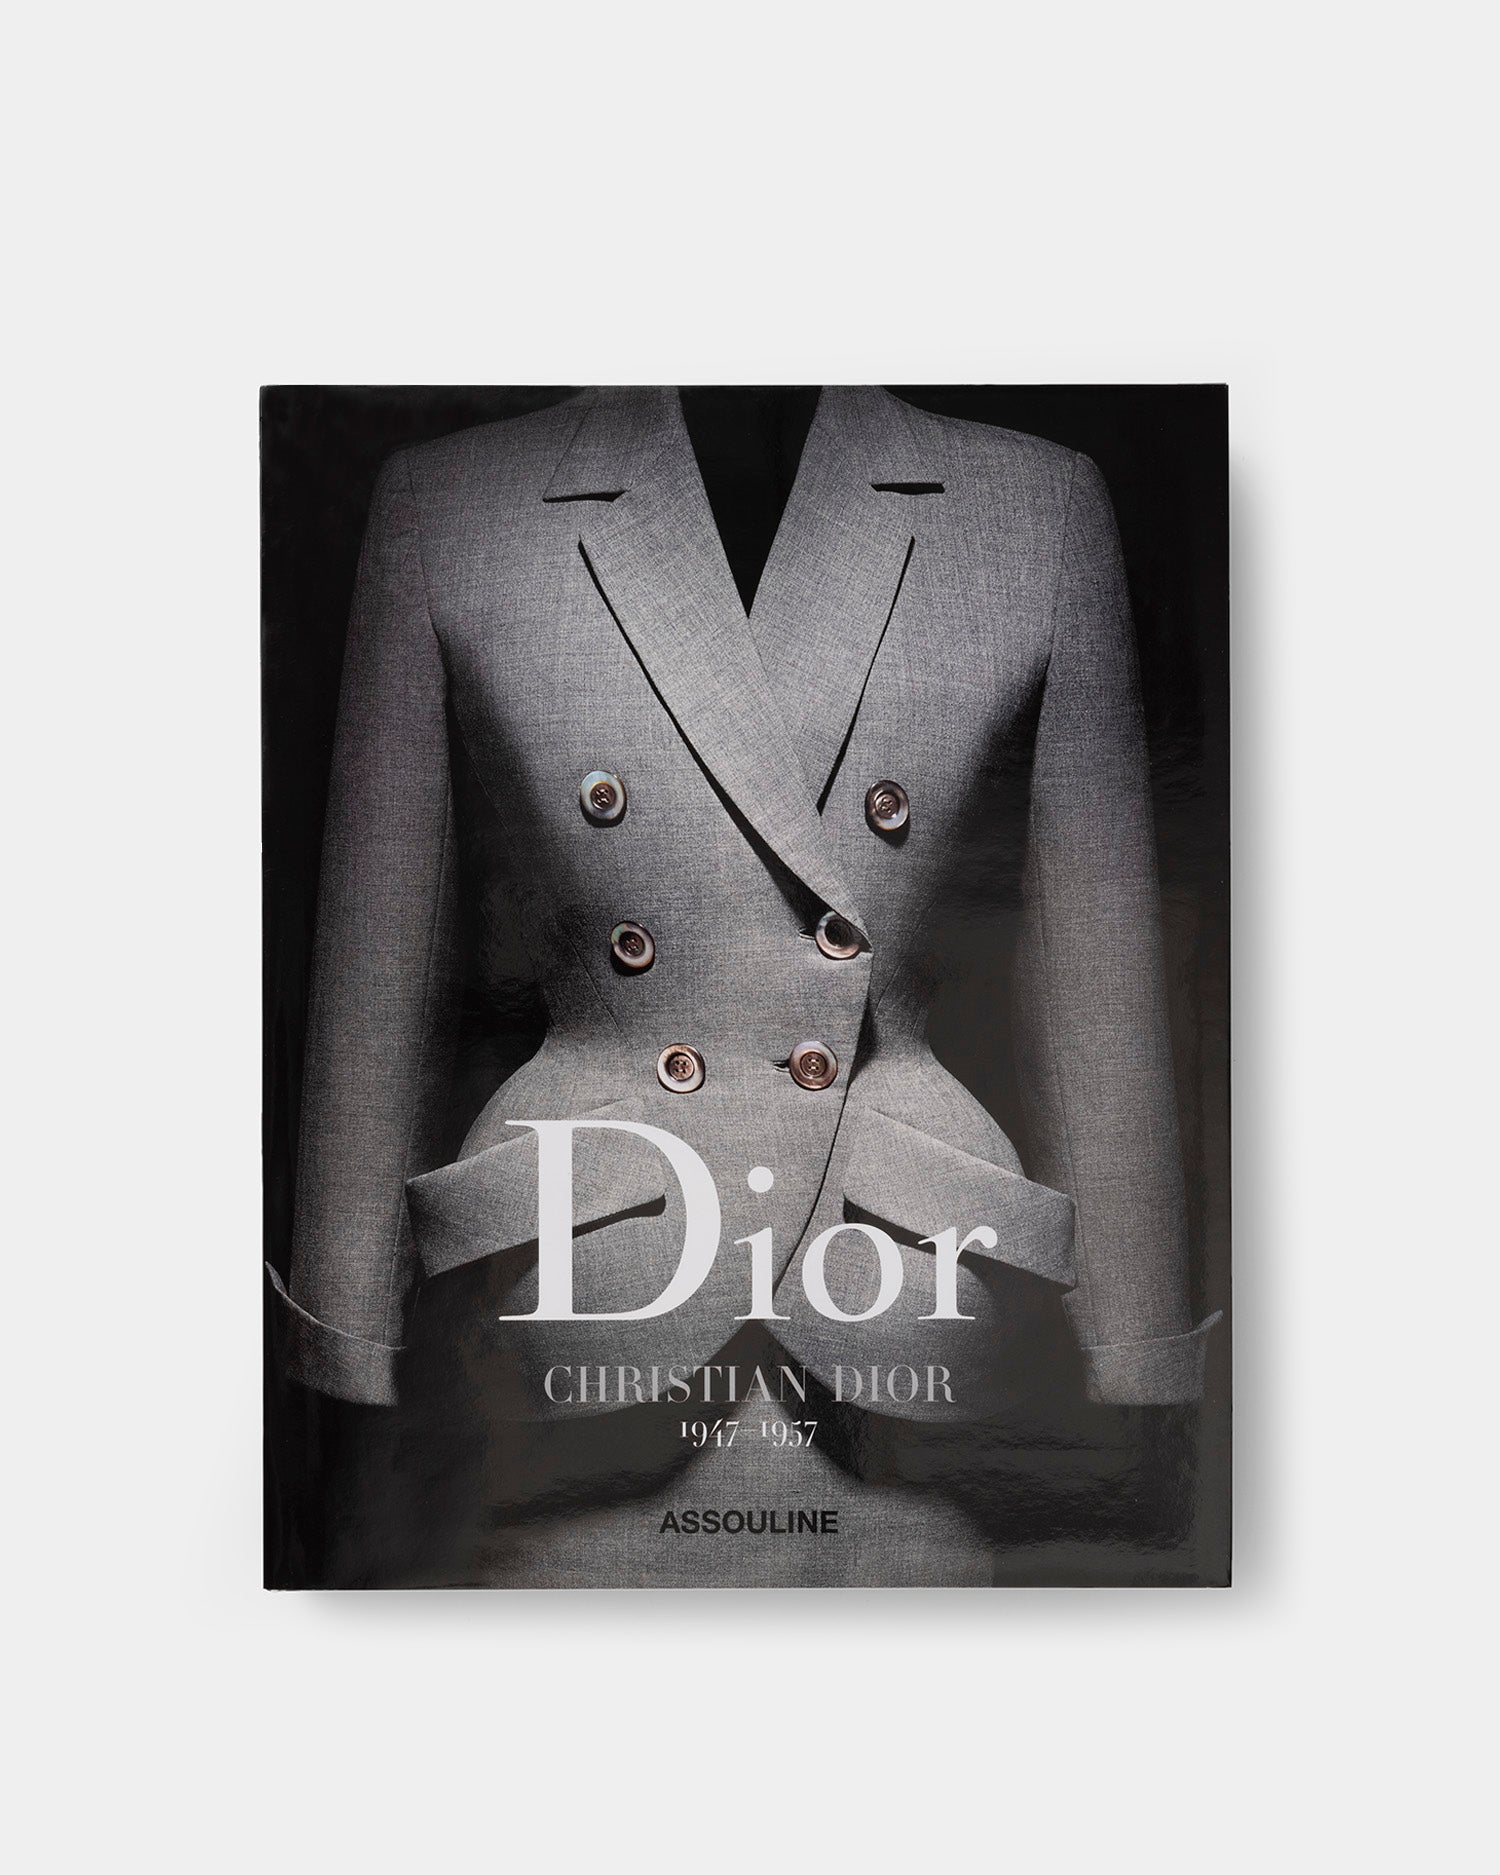 Dior by Christian Dior book by Olivier Saillard | ASSOULINE